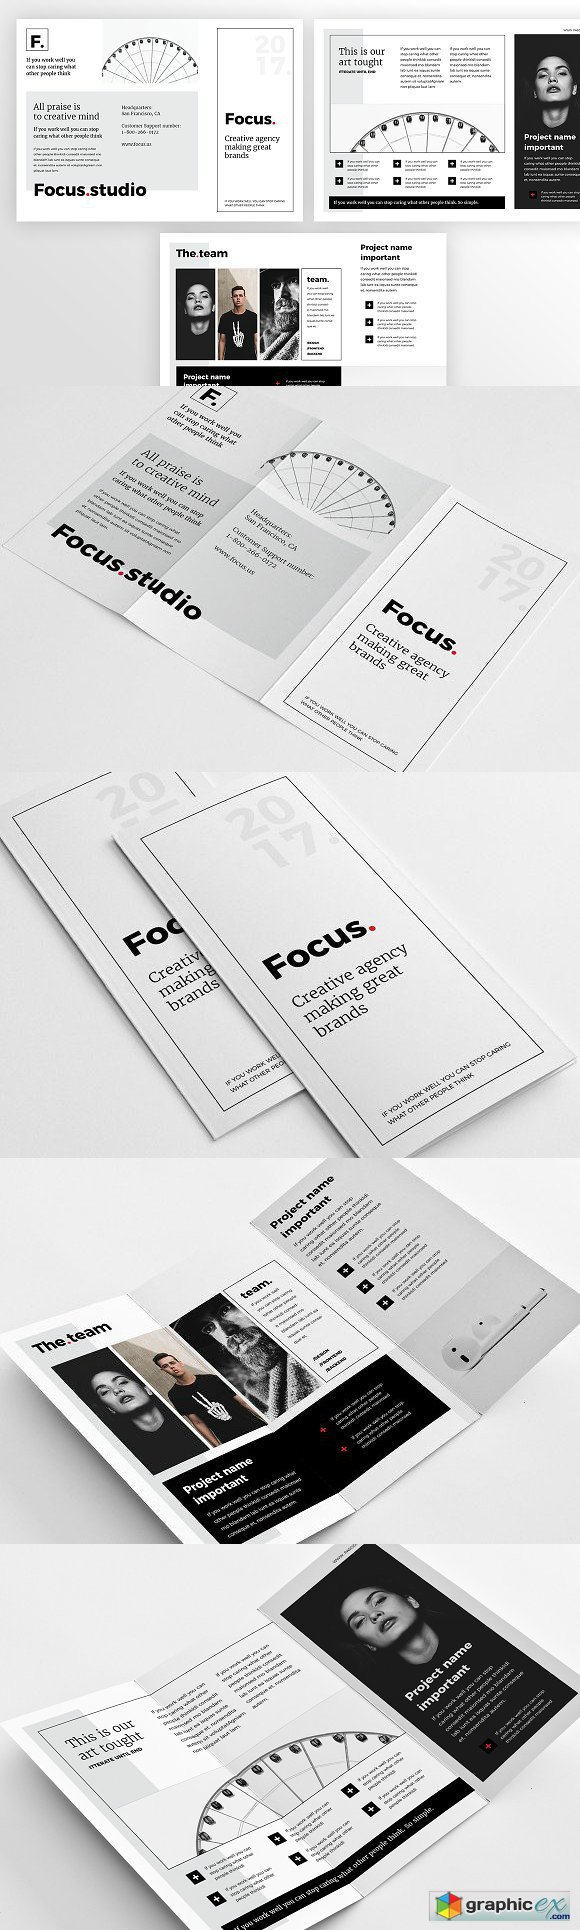 Focus - Agency 3fold Brochure